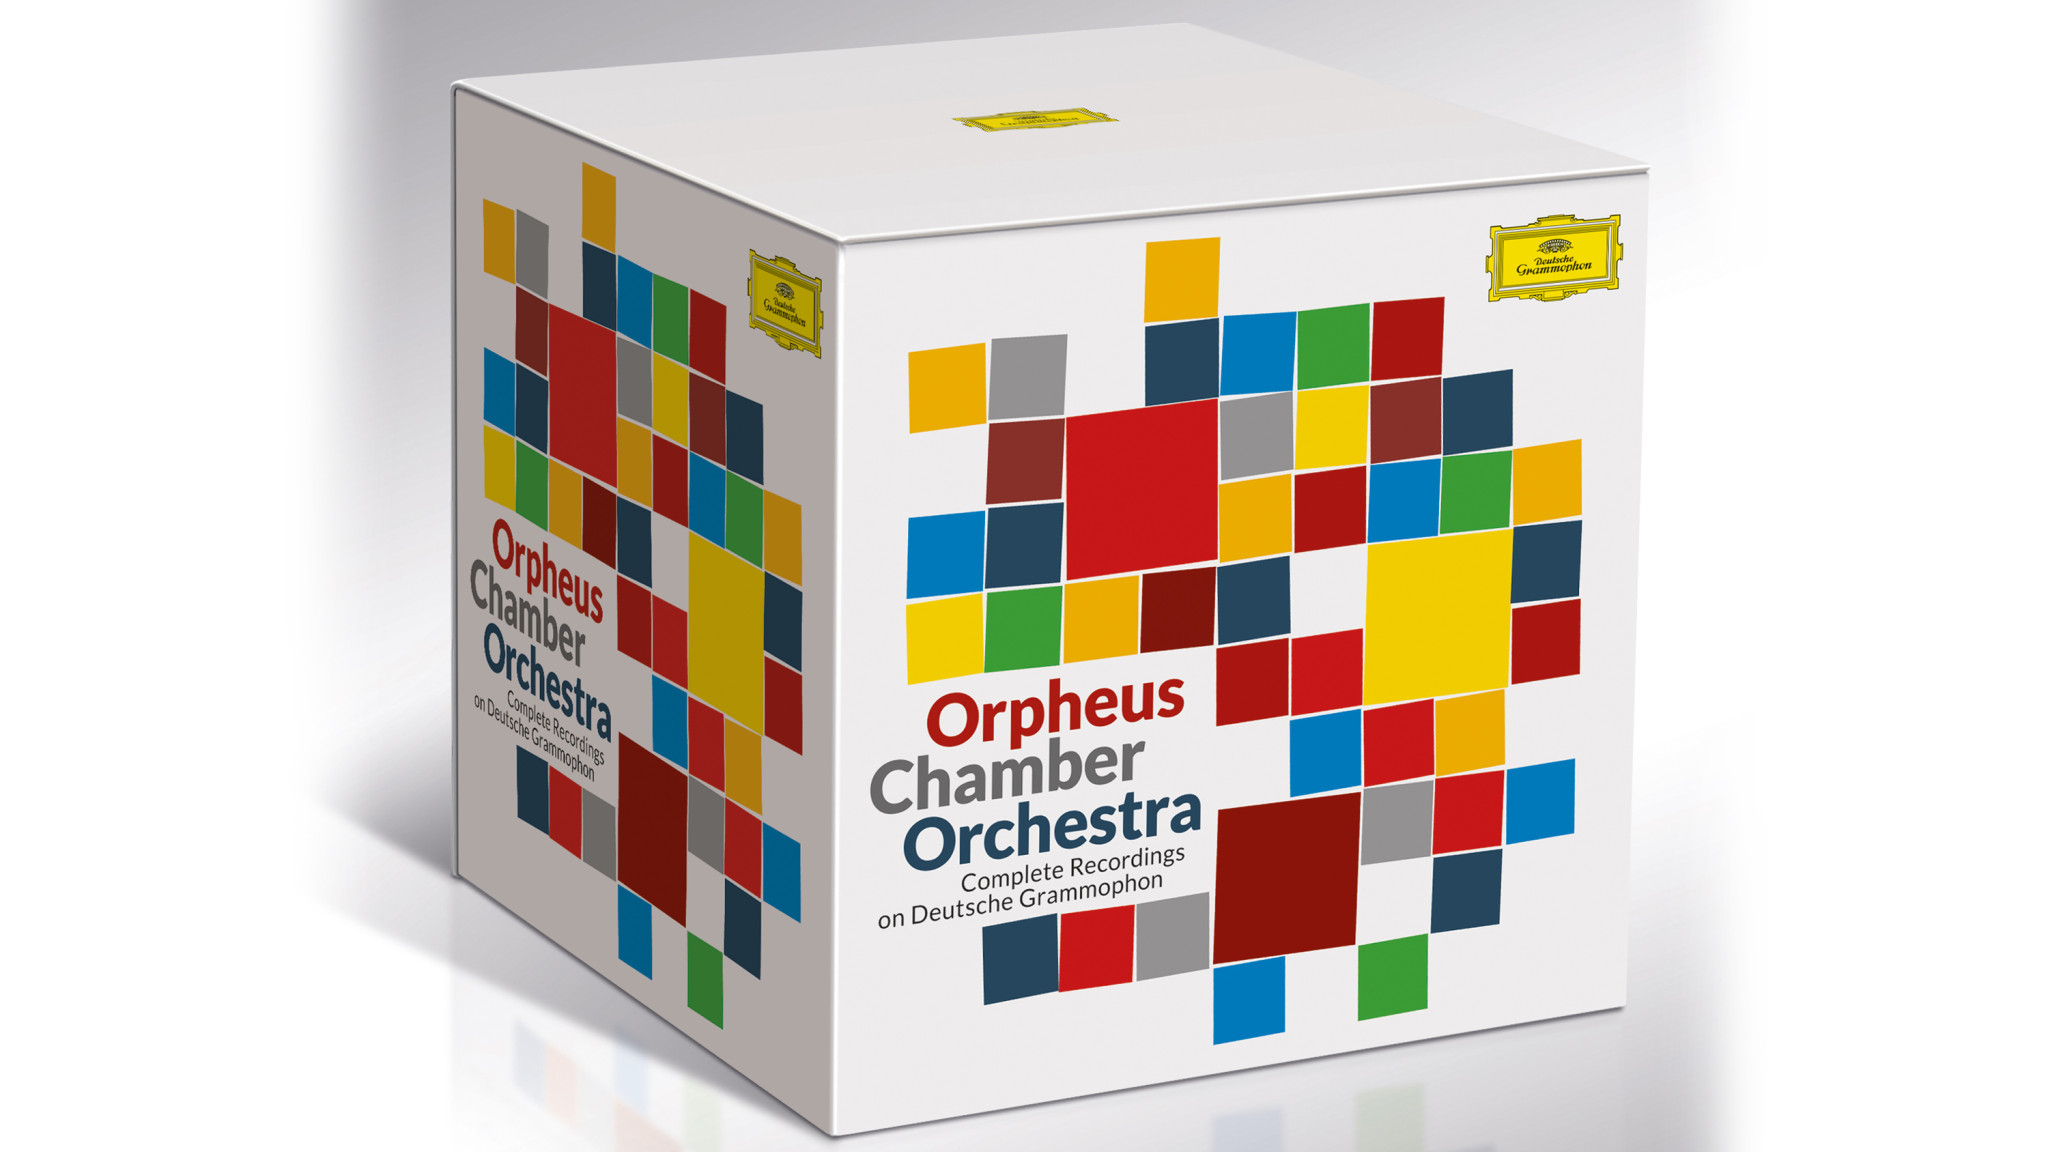 Orpheus Chamber Orchestra present their complete recordings on Deutsche Grammophon